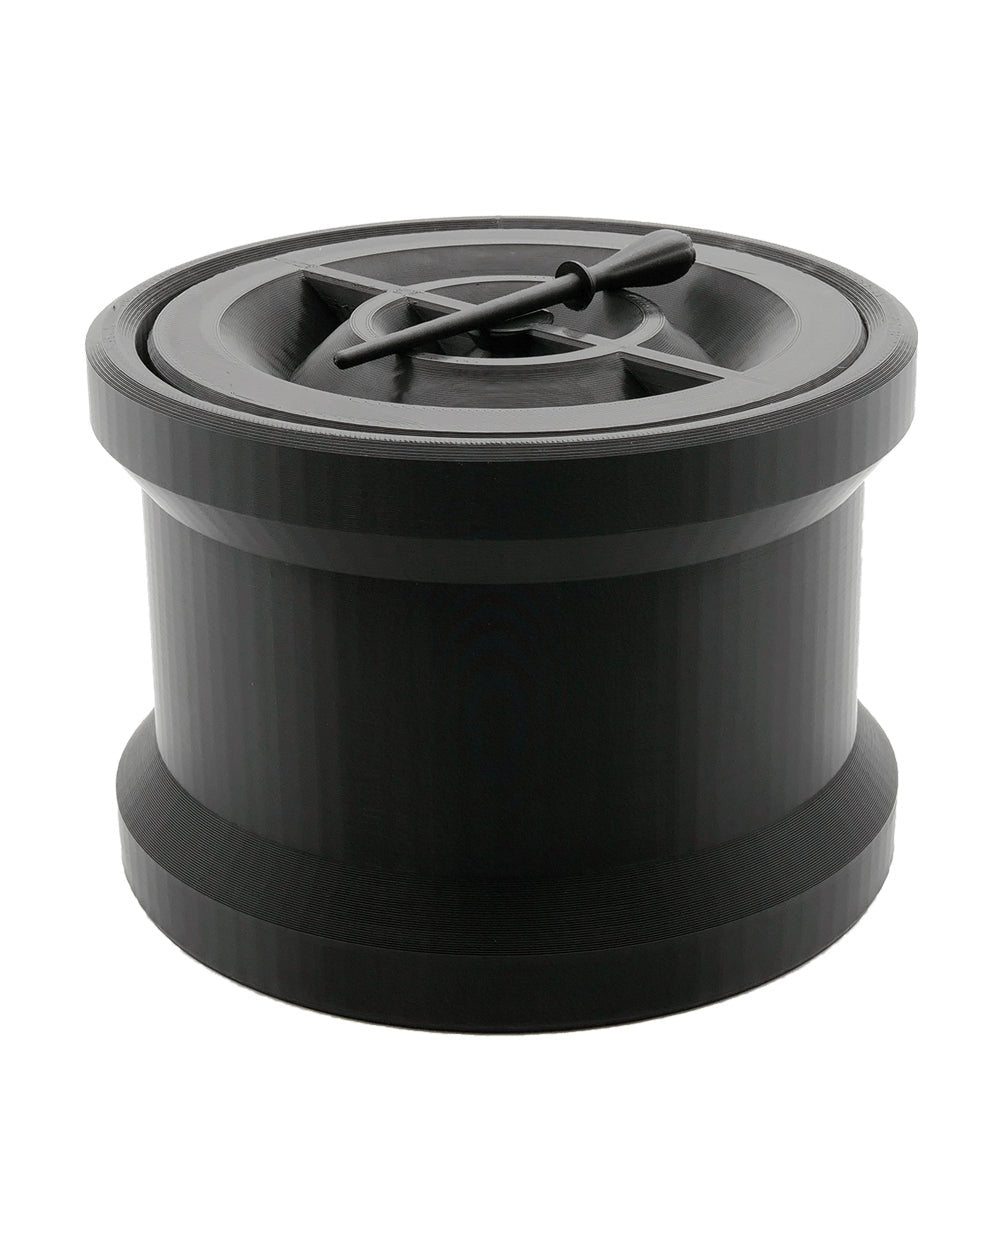 HUMBOLDT | Black Pre-Rolled Cones Filling Machine Cartridge 109mm | Fill 121 Cones Per Run - 2